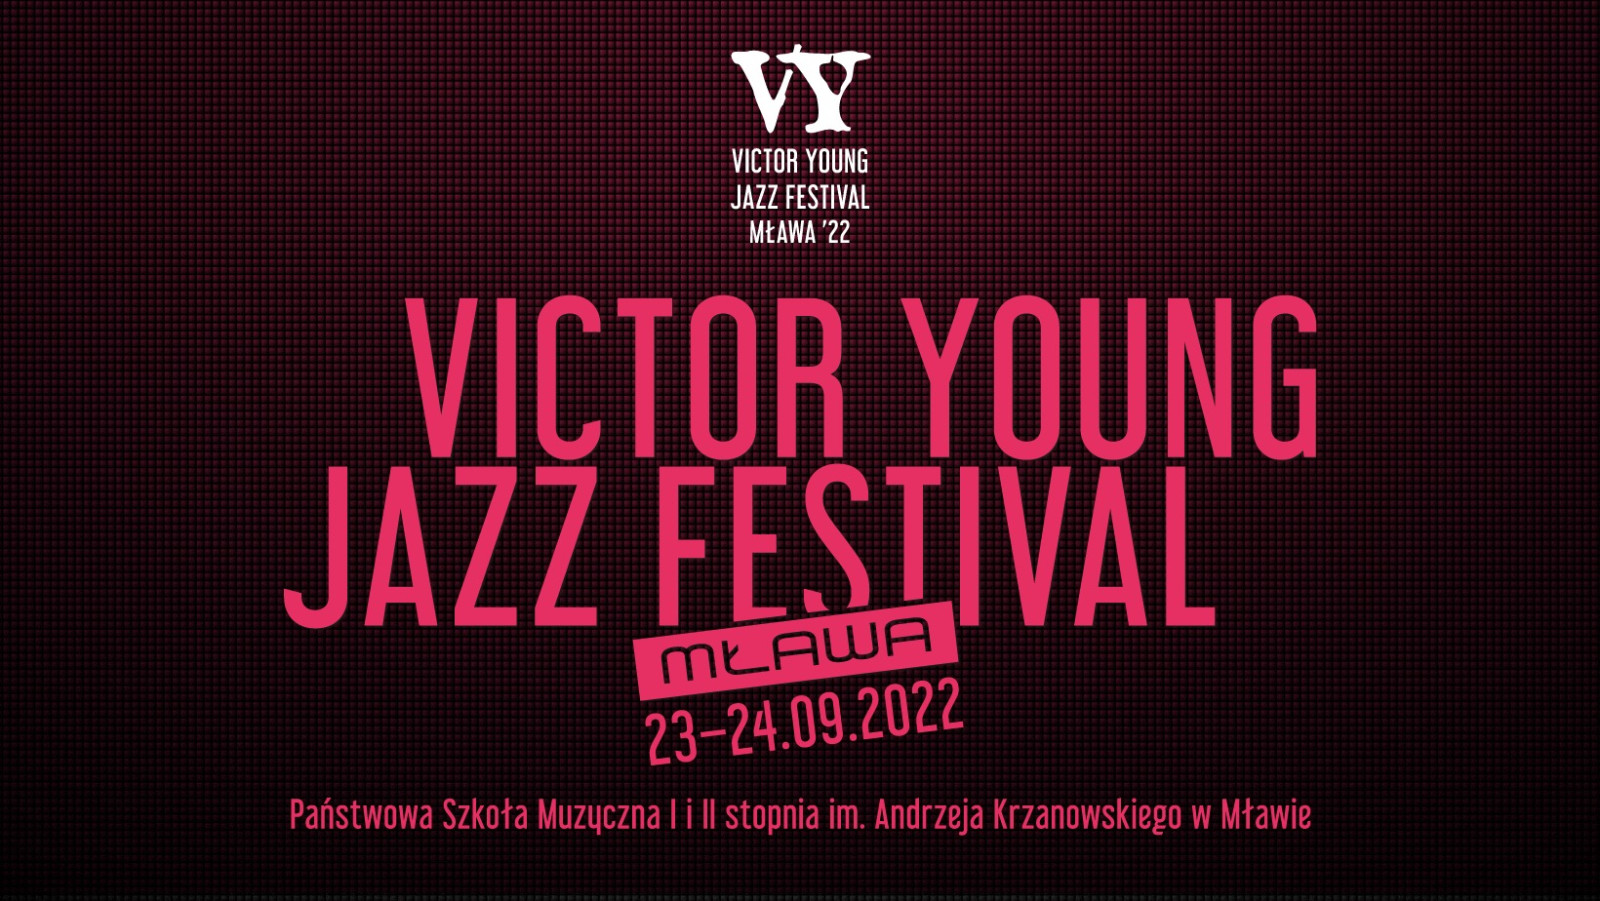 Victor Young Jazz Festival Mława ’22